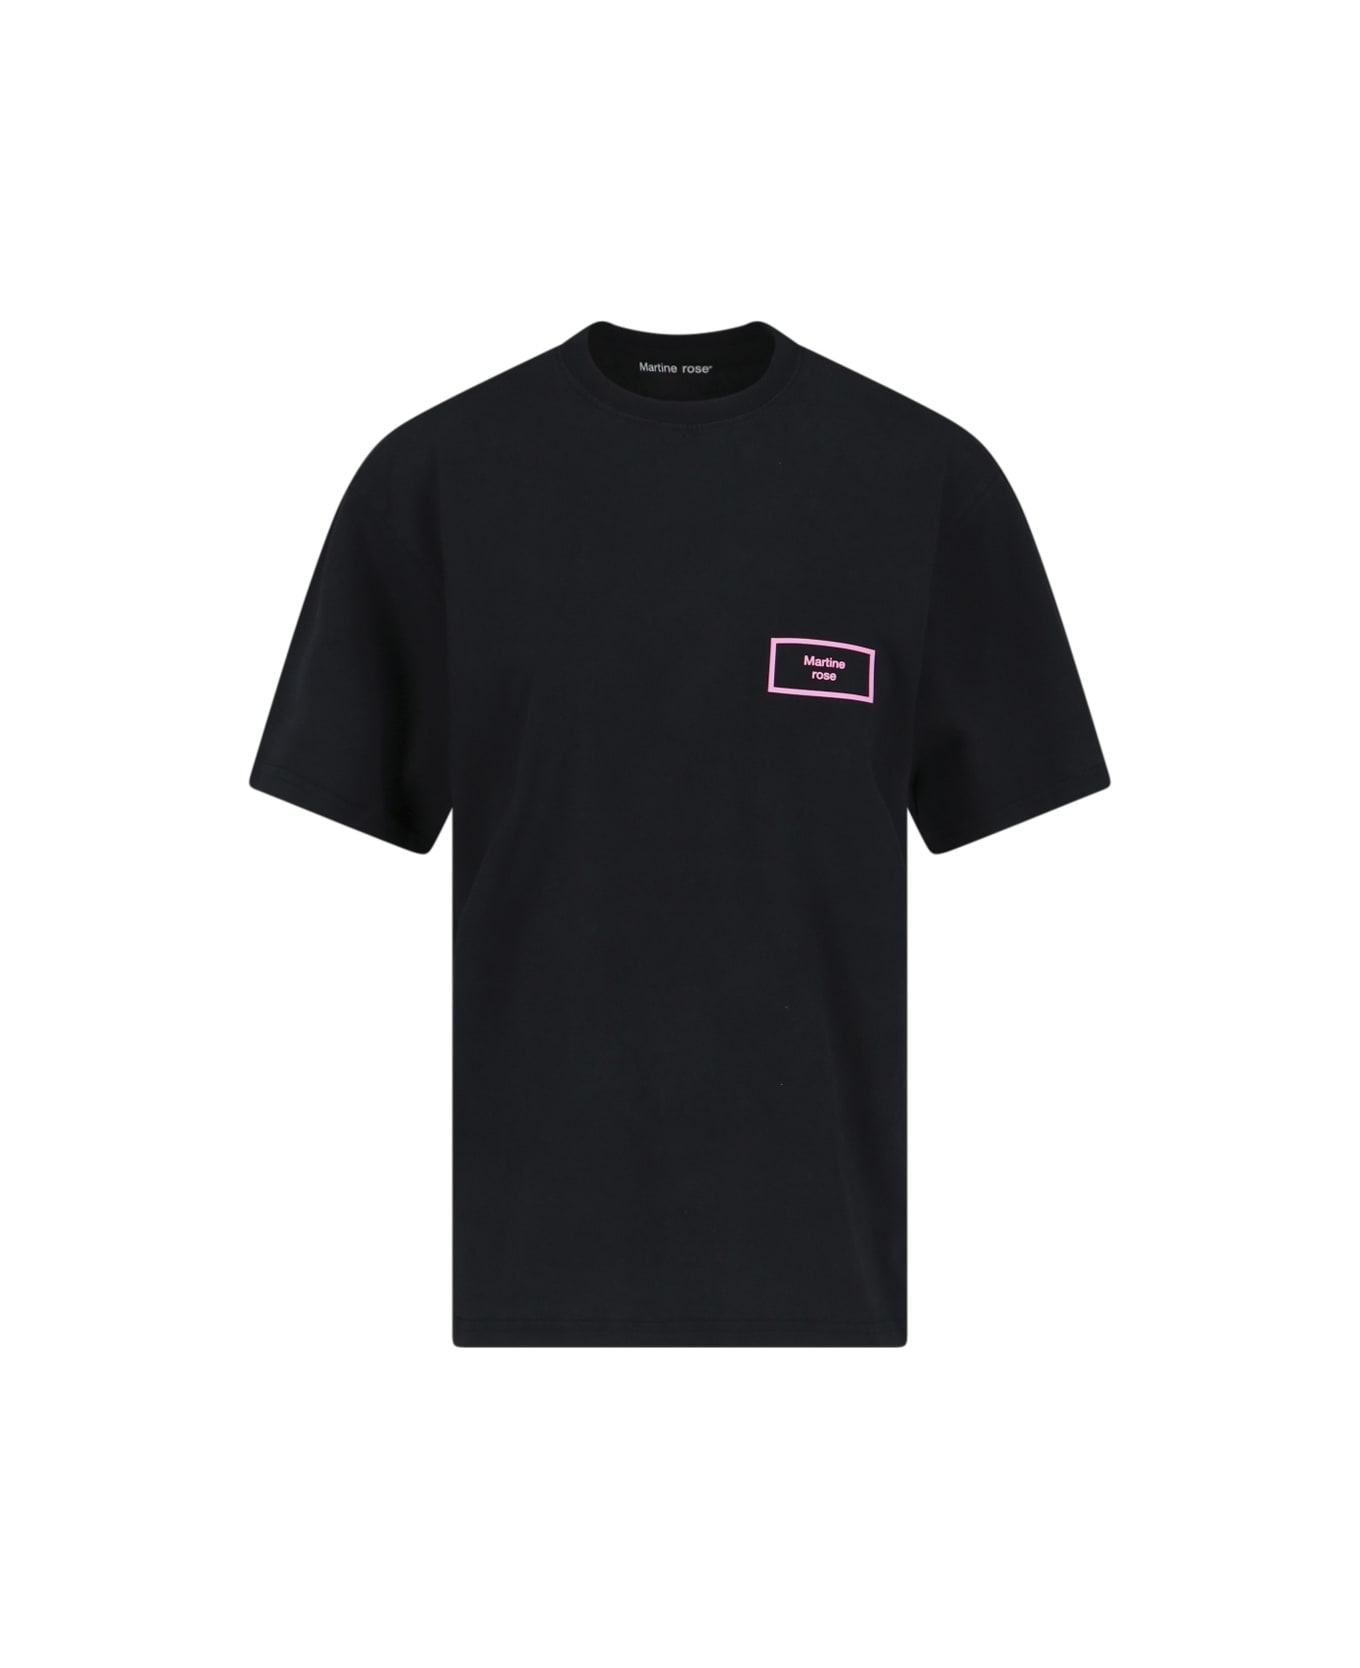 Martine Rose T-Shirt - Black